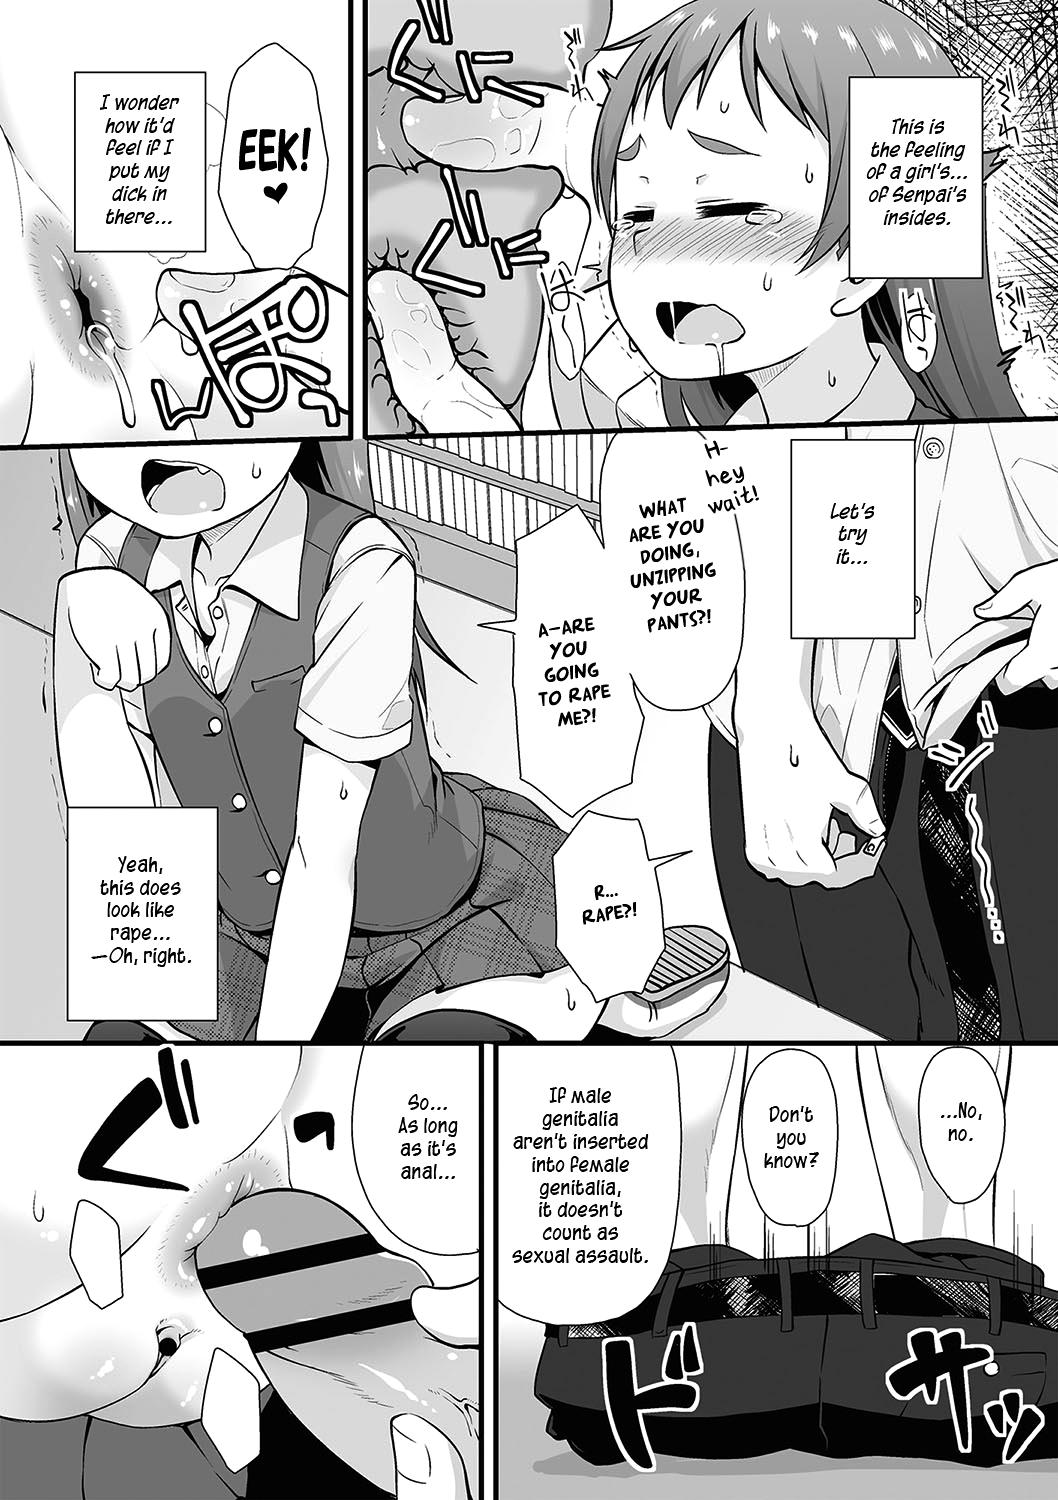 Manga Club Activity Log 10